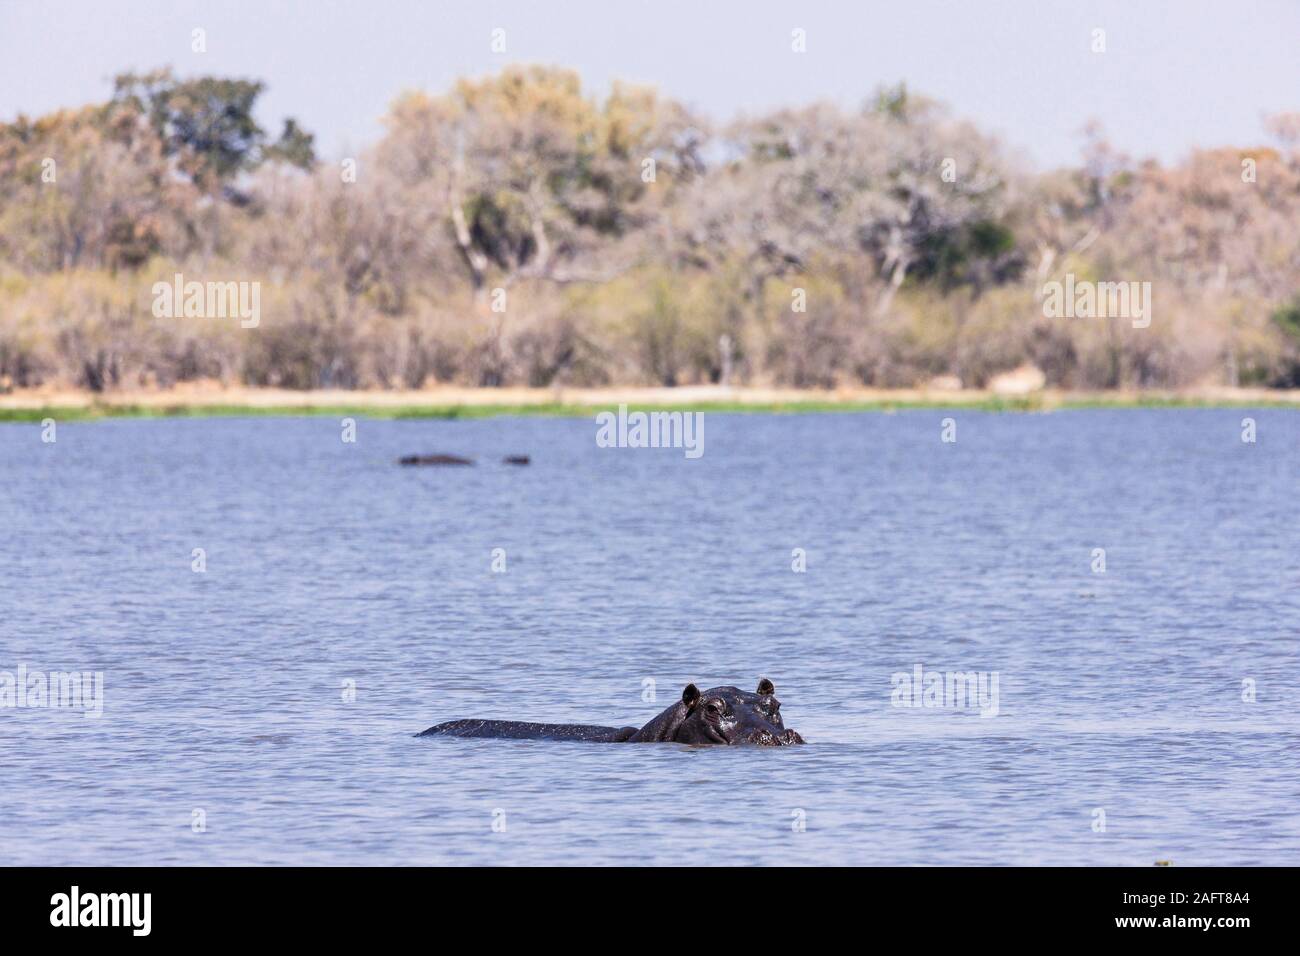 Hippo floating in hippo pool, Moremi game reserve, Okavango delta, Botswana, Africa Stock Photo